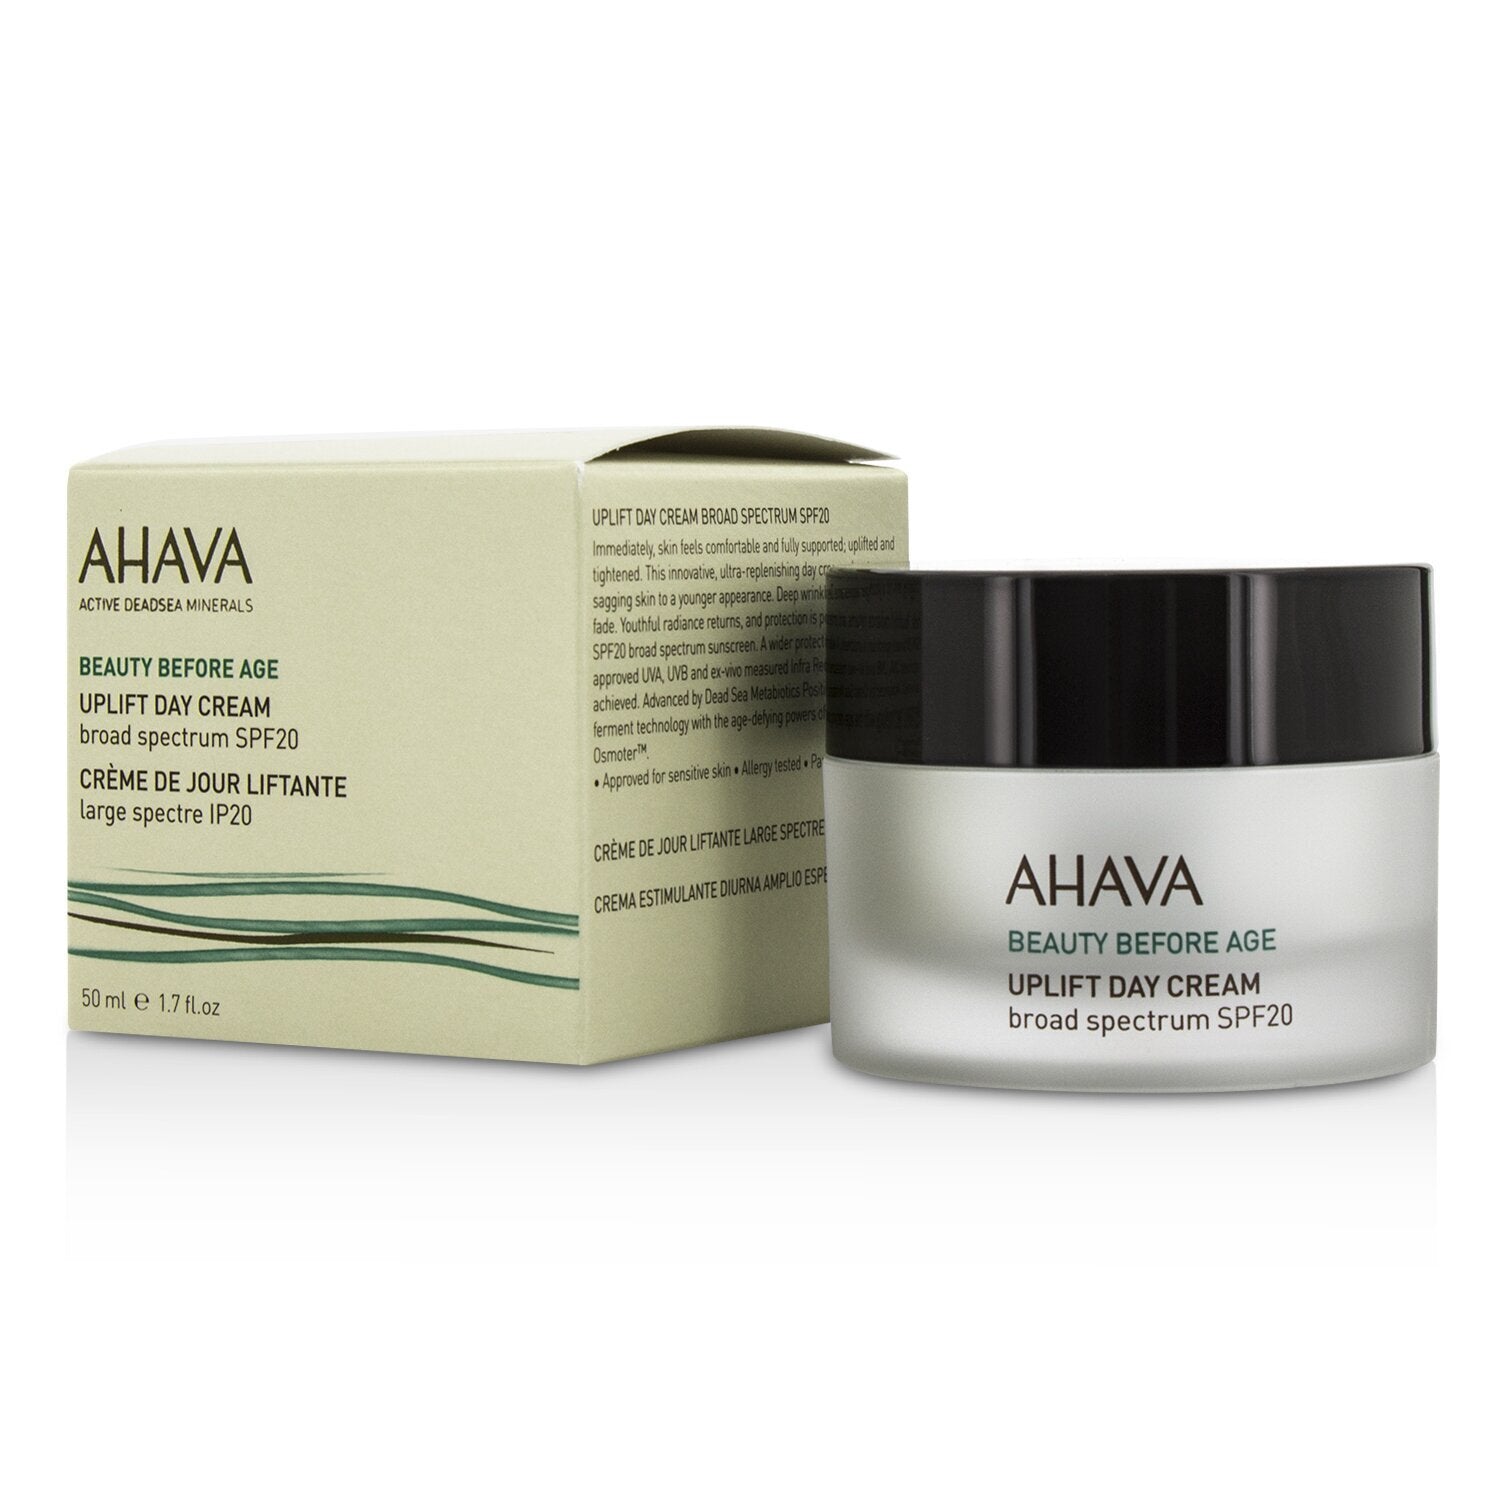 Ahava Beauty Cream SPF20 USA Co. Beauty Before Spectrum Day Broad Fresh Uplift Age –